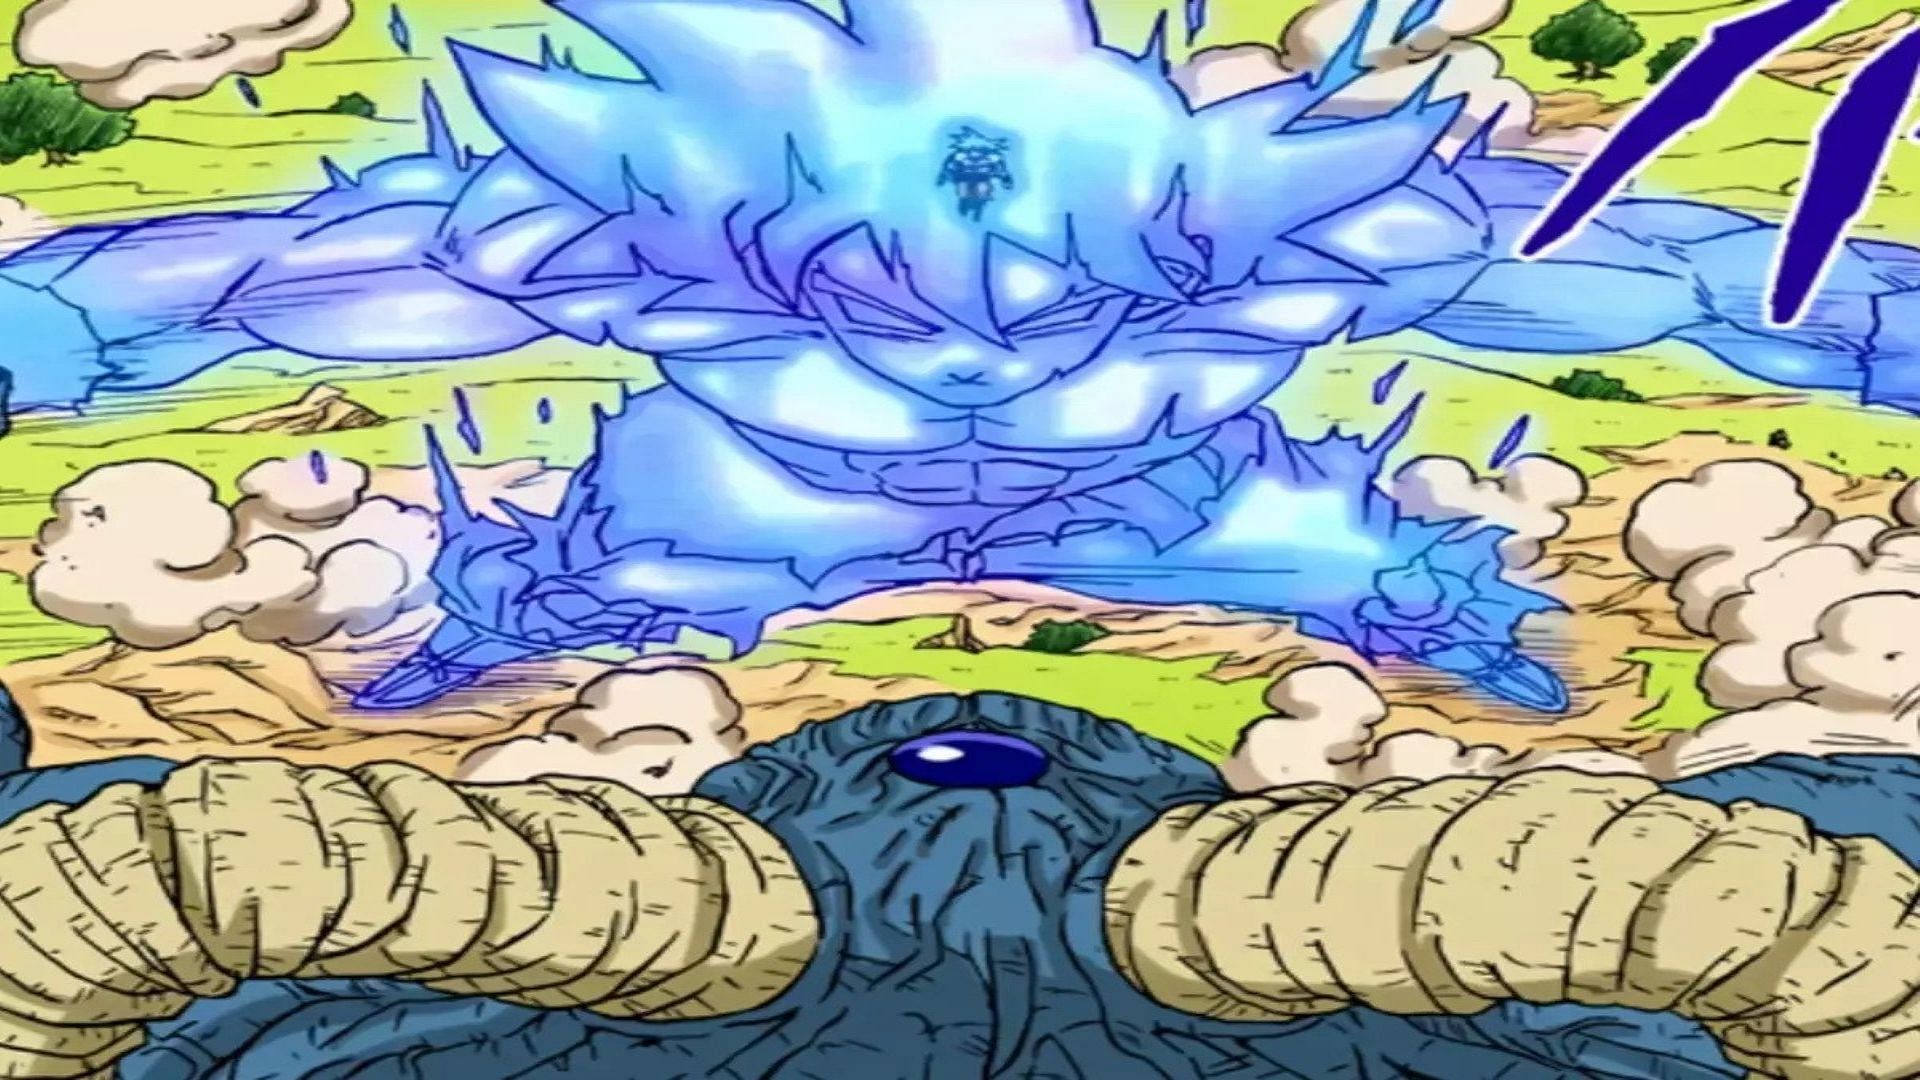 Goku awakens his gigantic form in the middle of critical fights. (Image via Akira Toriyama/Shueisha, Viz Media, Dragon Ball Super)